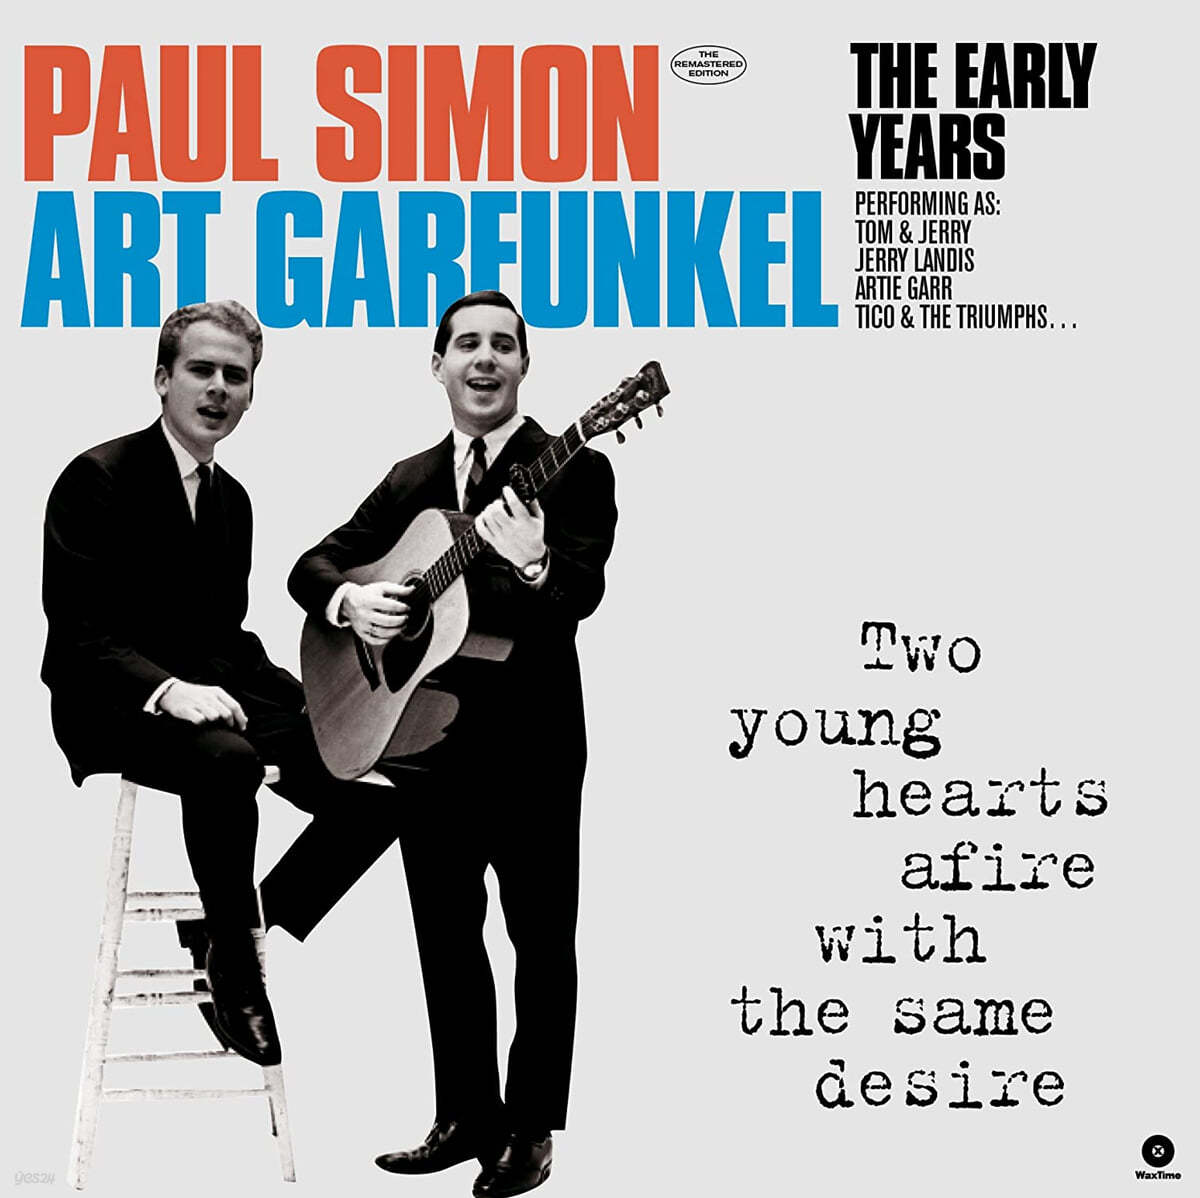 Paul Simon / Art Garfunkel (파울 시몬 / 아트 가펑클) - The Early Years [LP] 